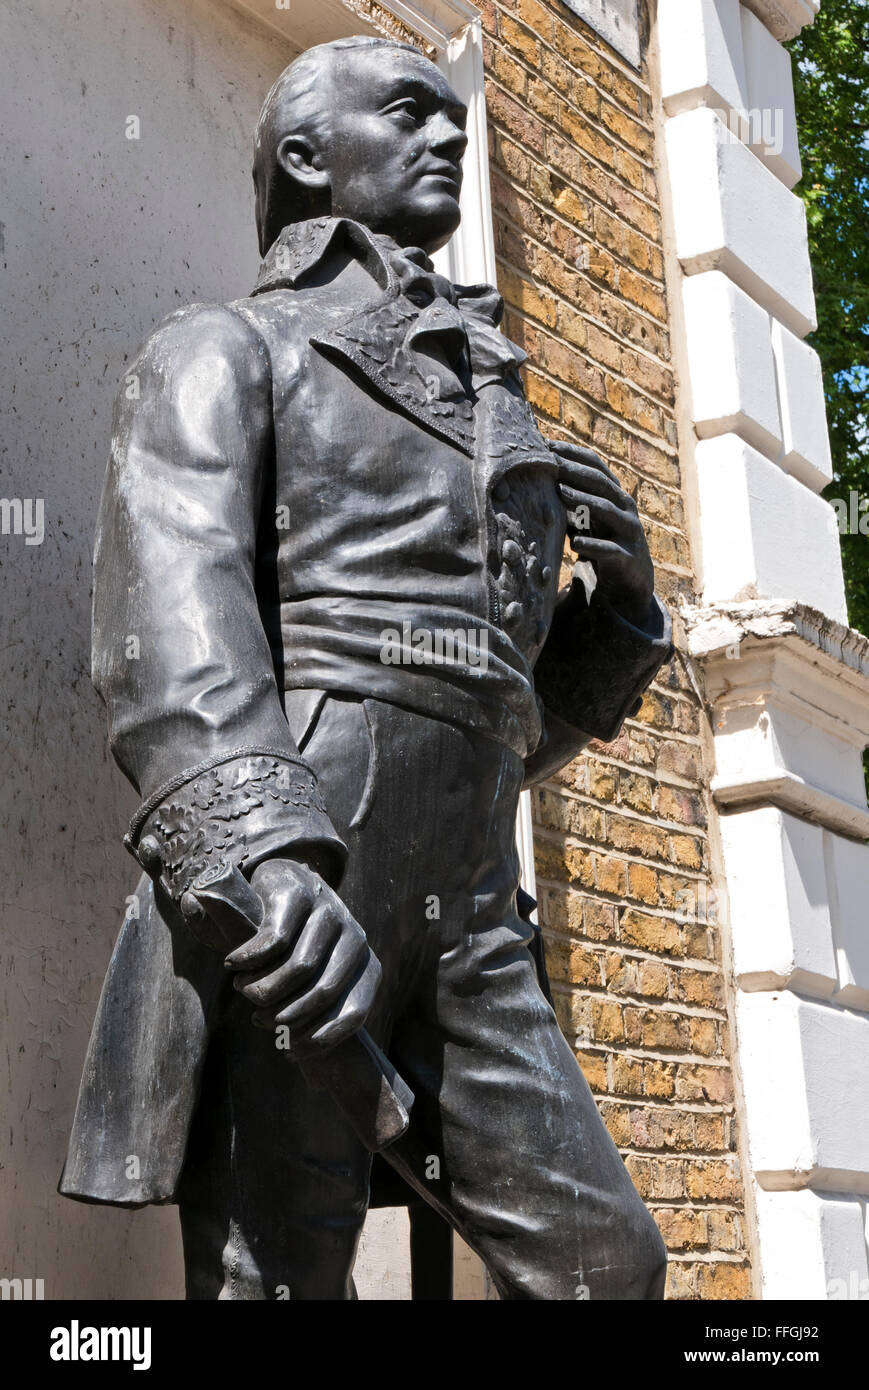 The statue of Francisco de Miranda, El Precursor, an 18th century Cuban revolutionary hero born in Venezuela, London. Stock Photo